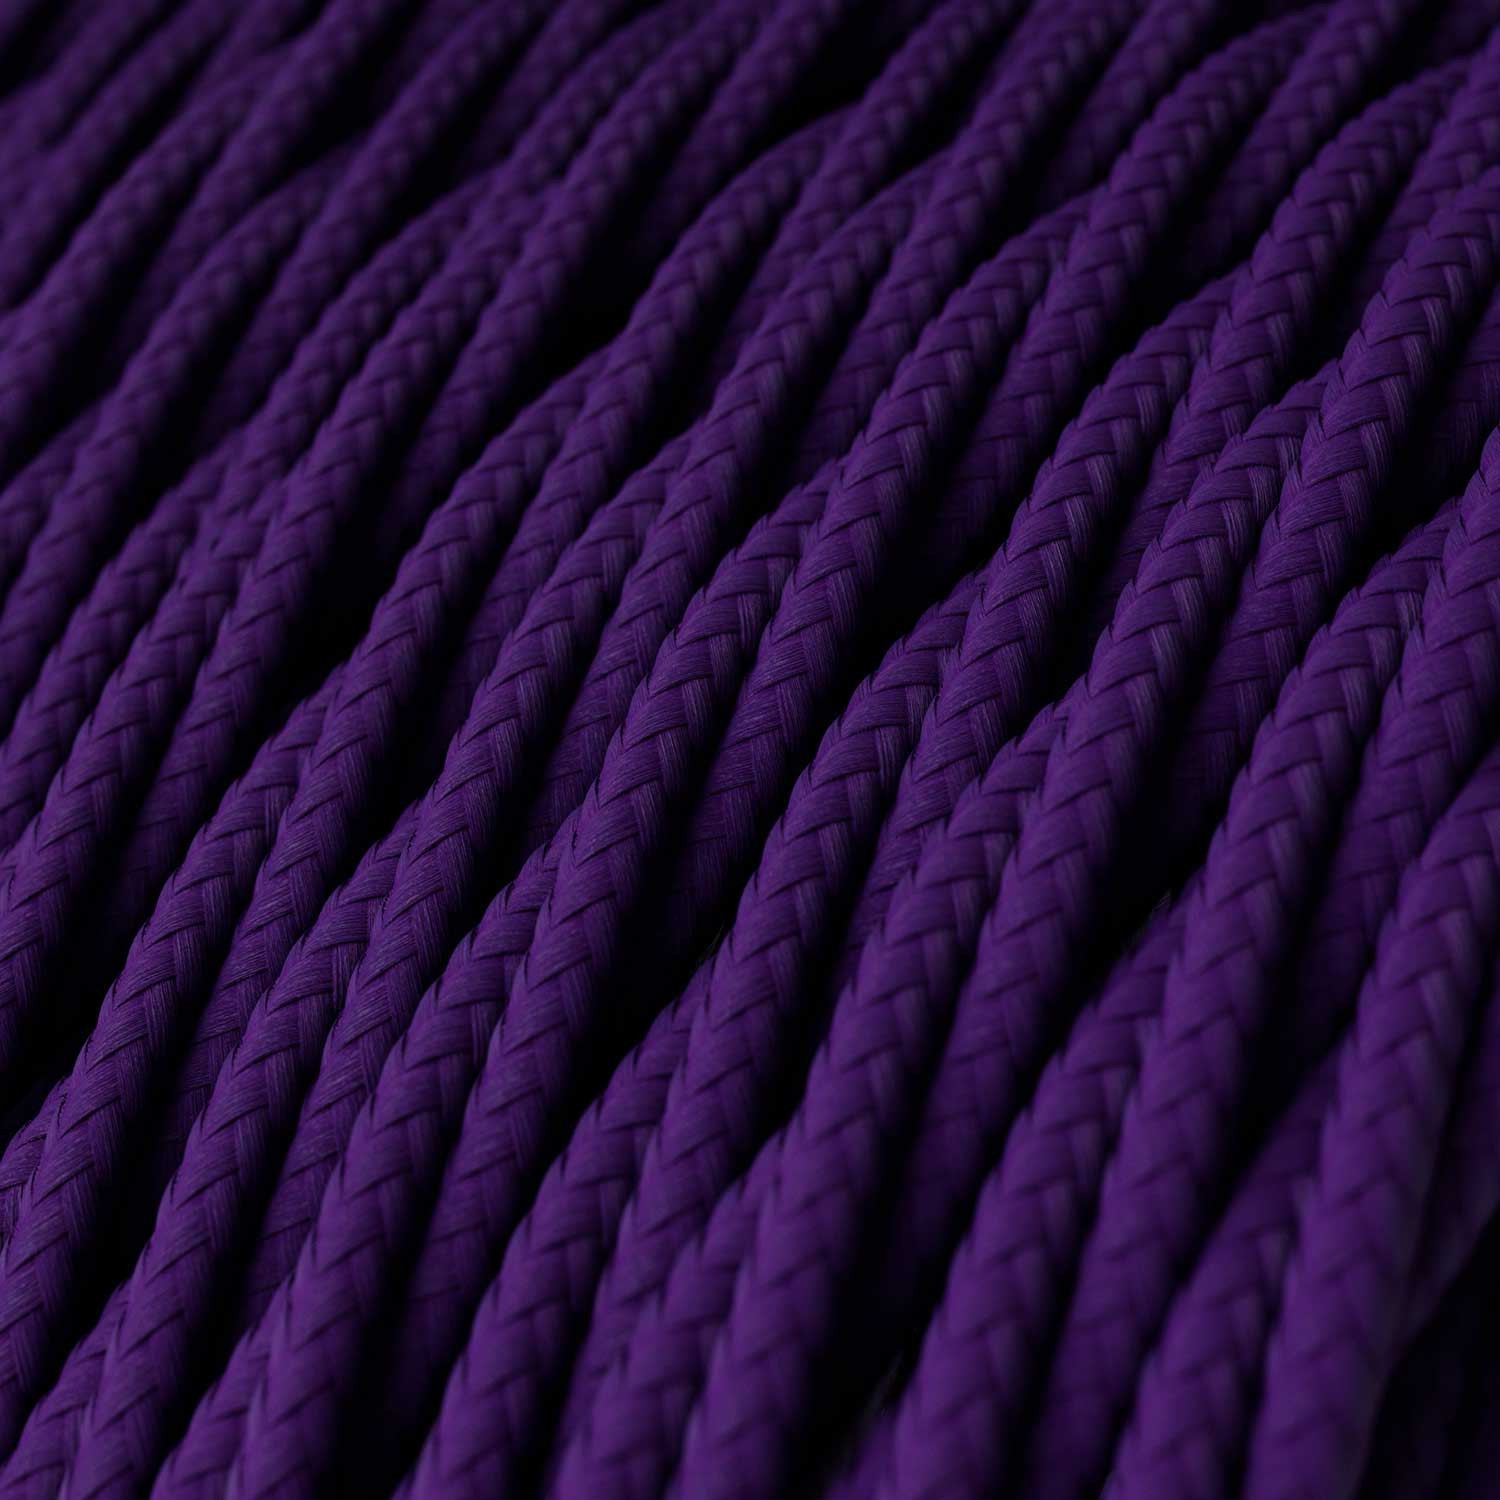 Zamotan tekstilni električni kabel TM14 - purpurna